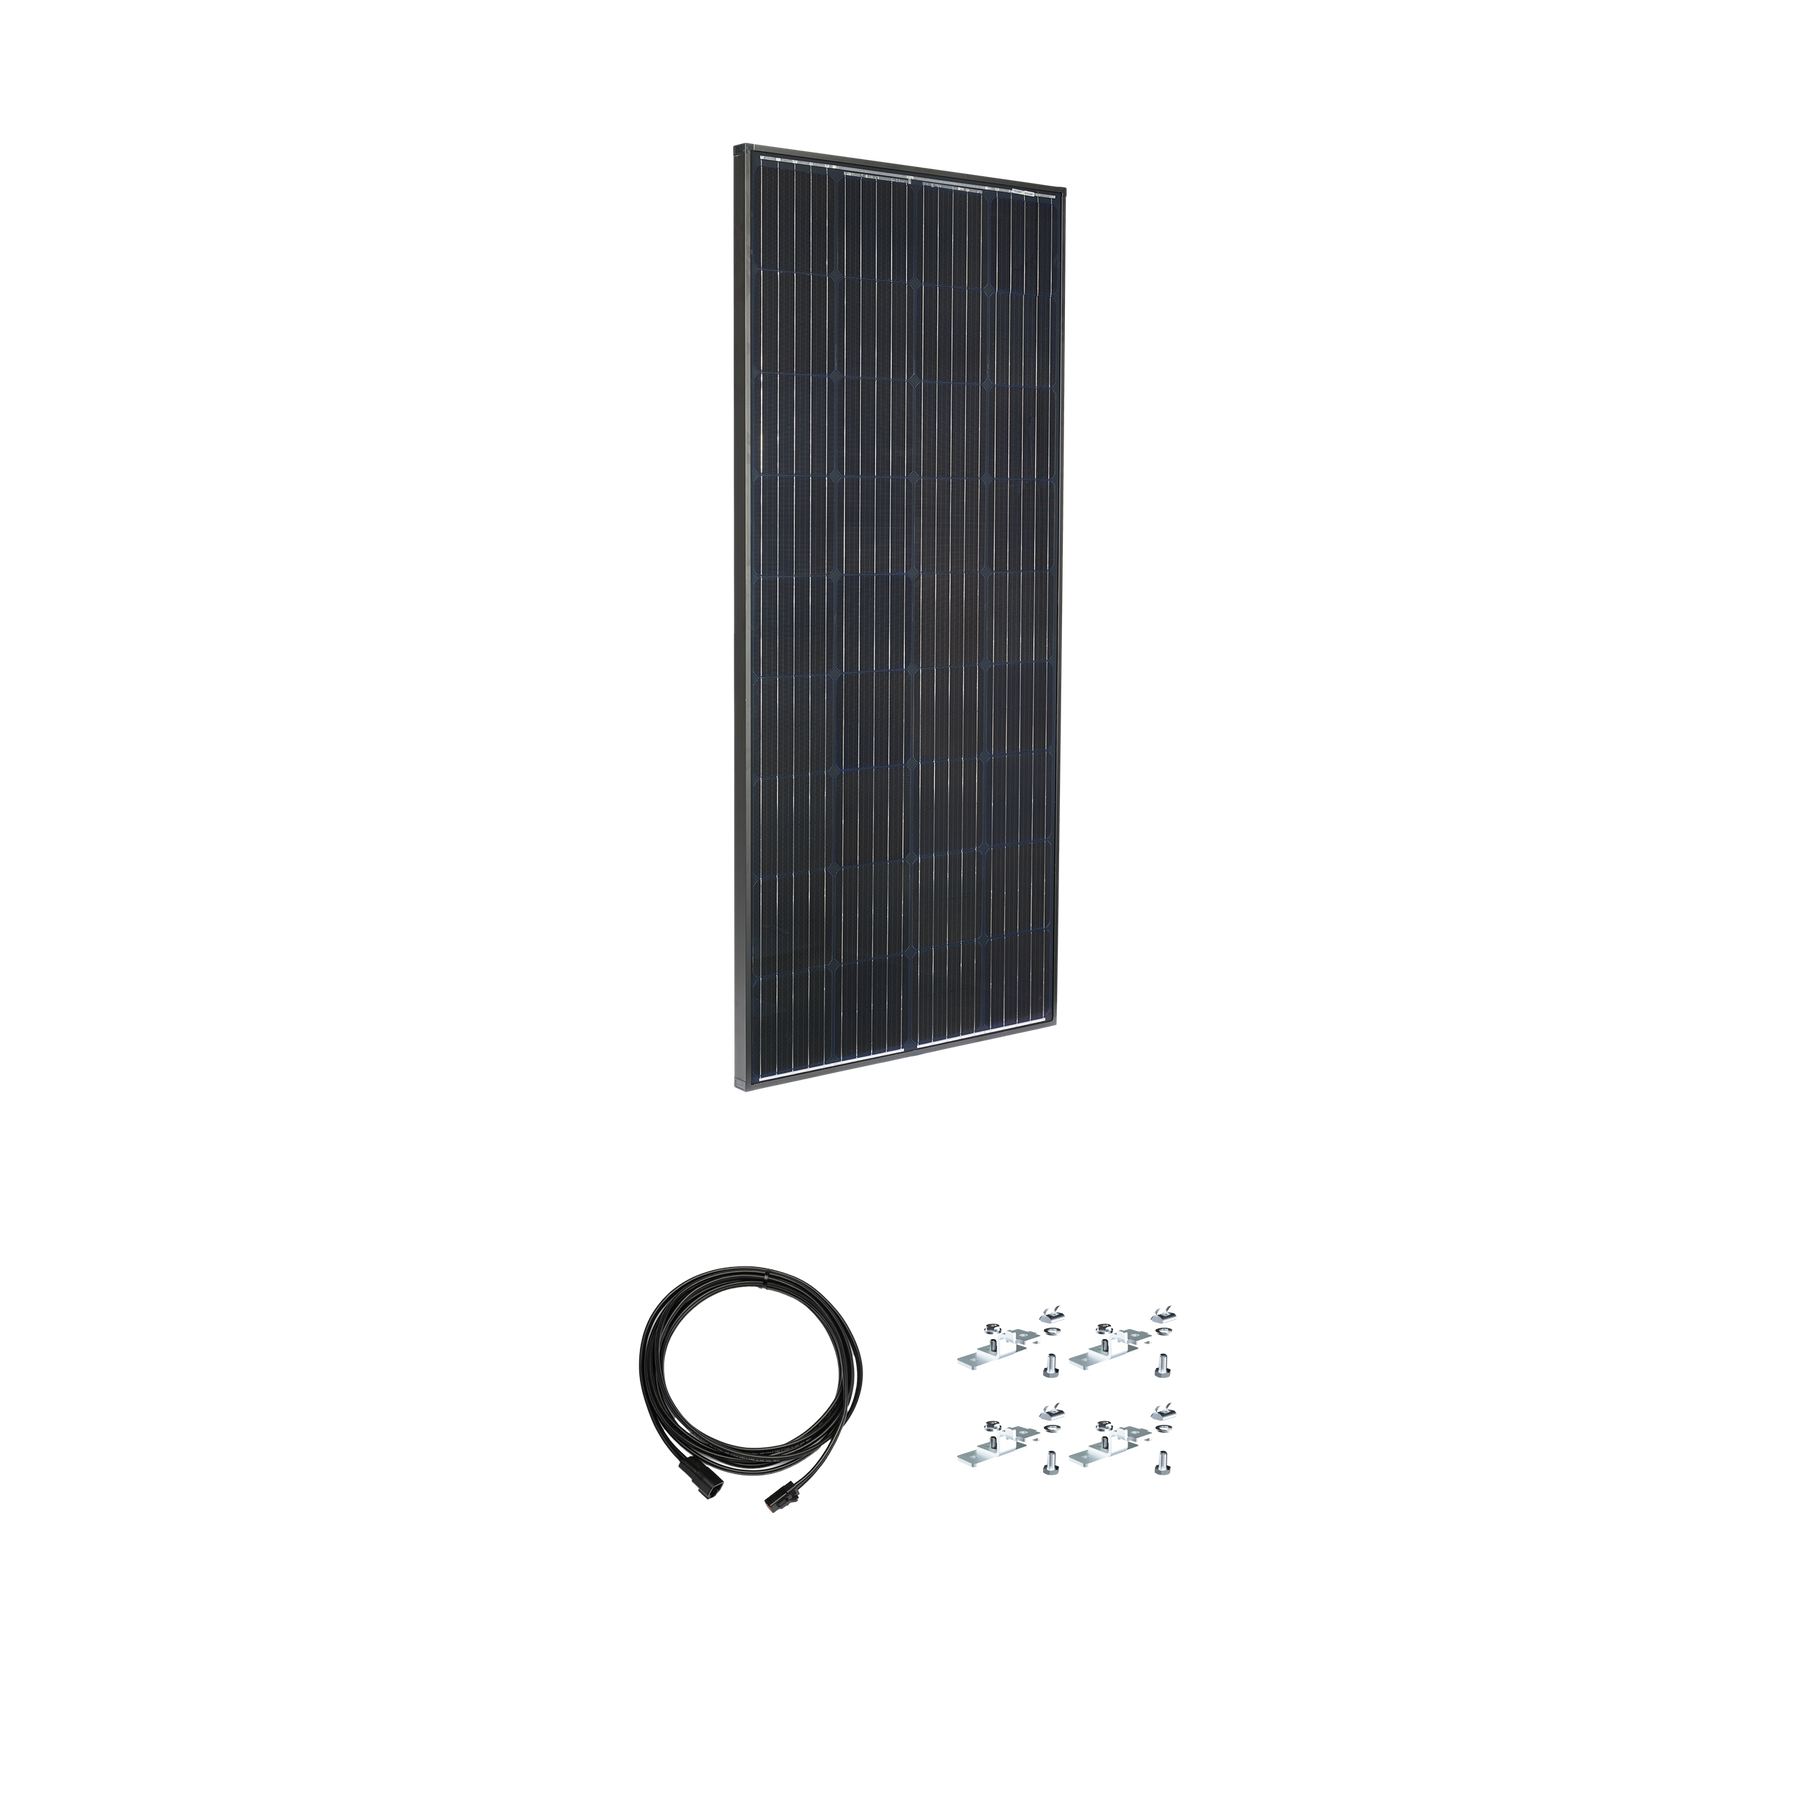 Legacy Black 190 Watt Expansion Kit  Roof Panel Kit Zamp Solar- Adventure Imports